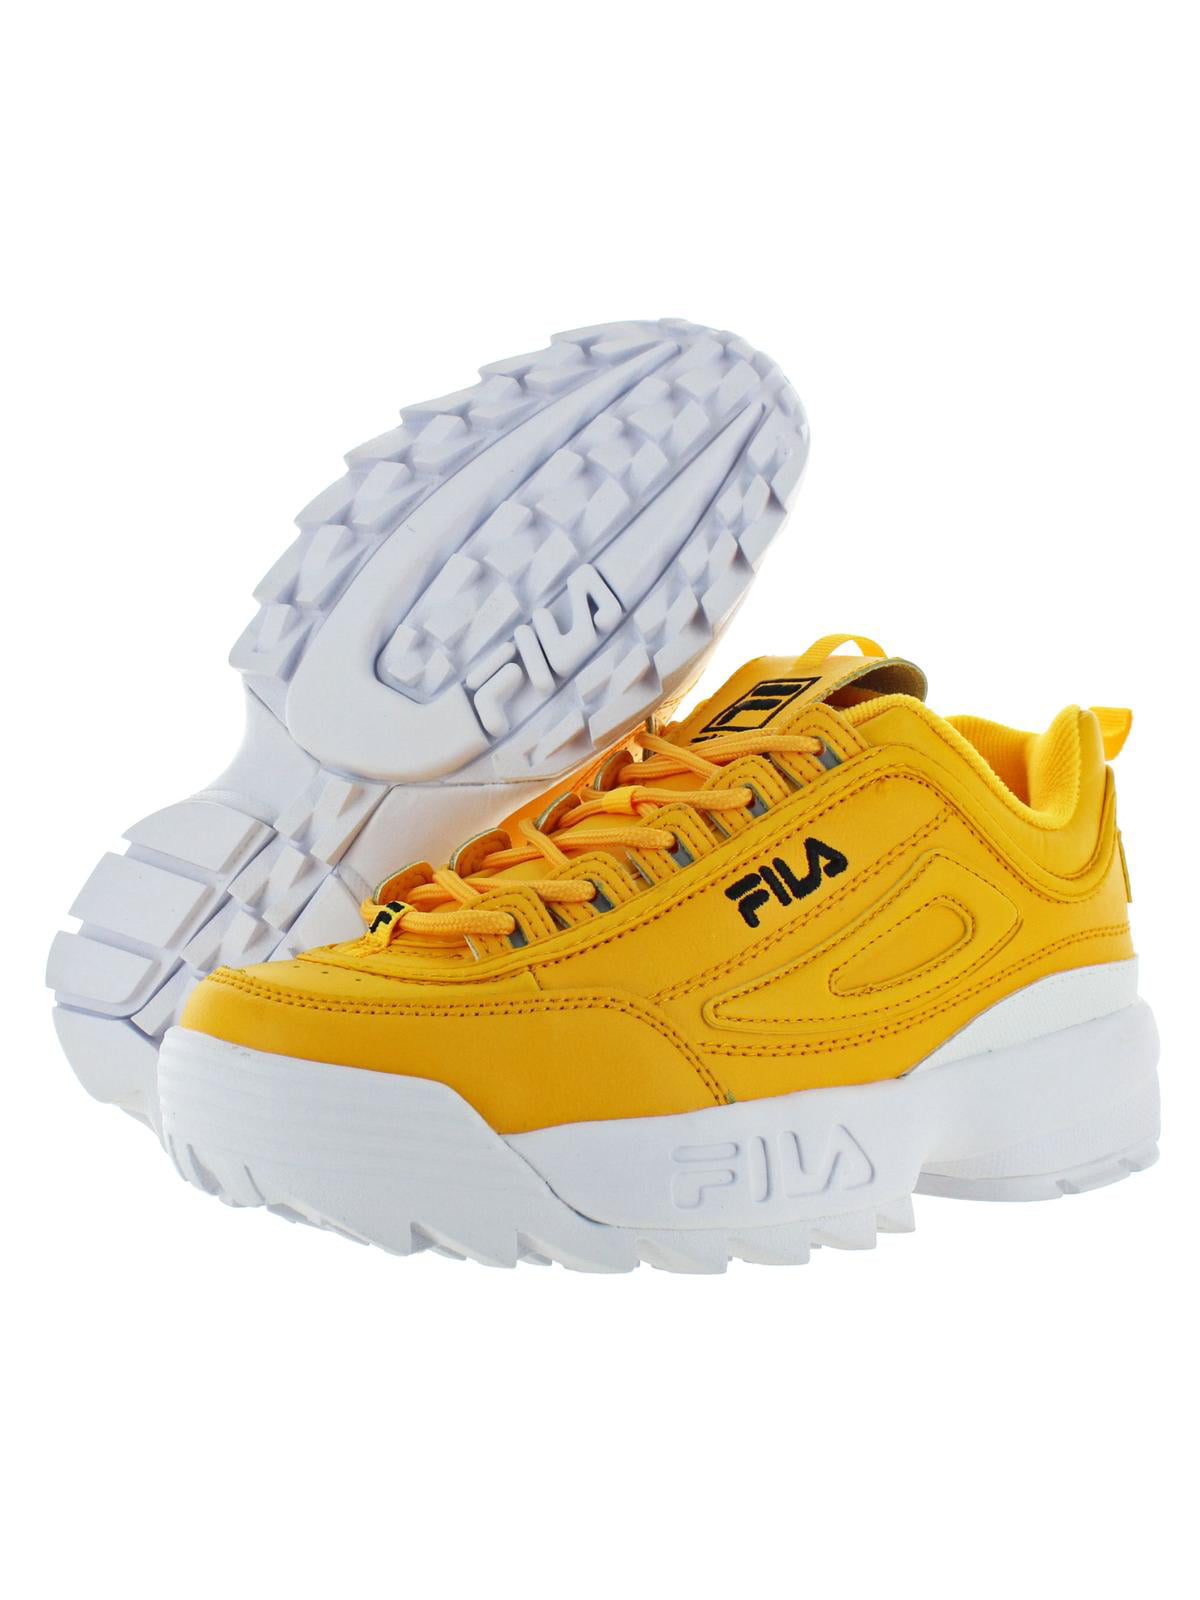 fila yellow shoes price